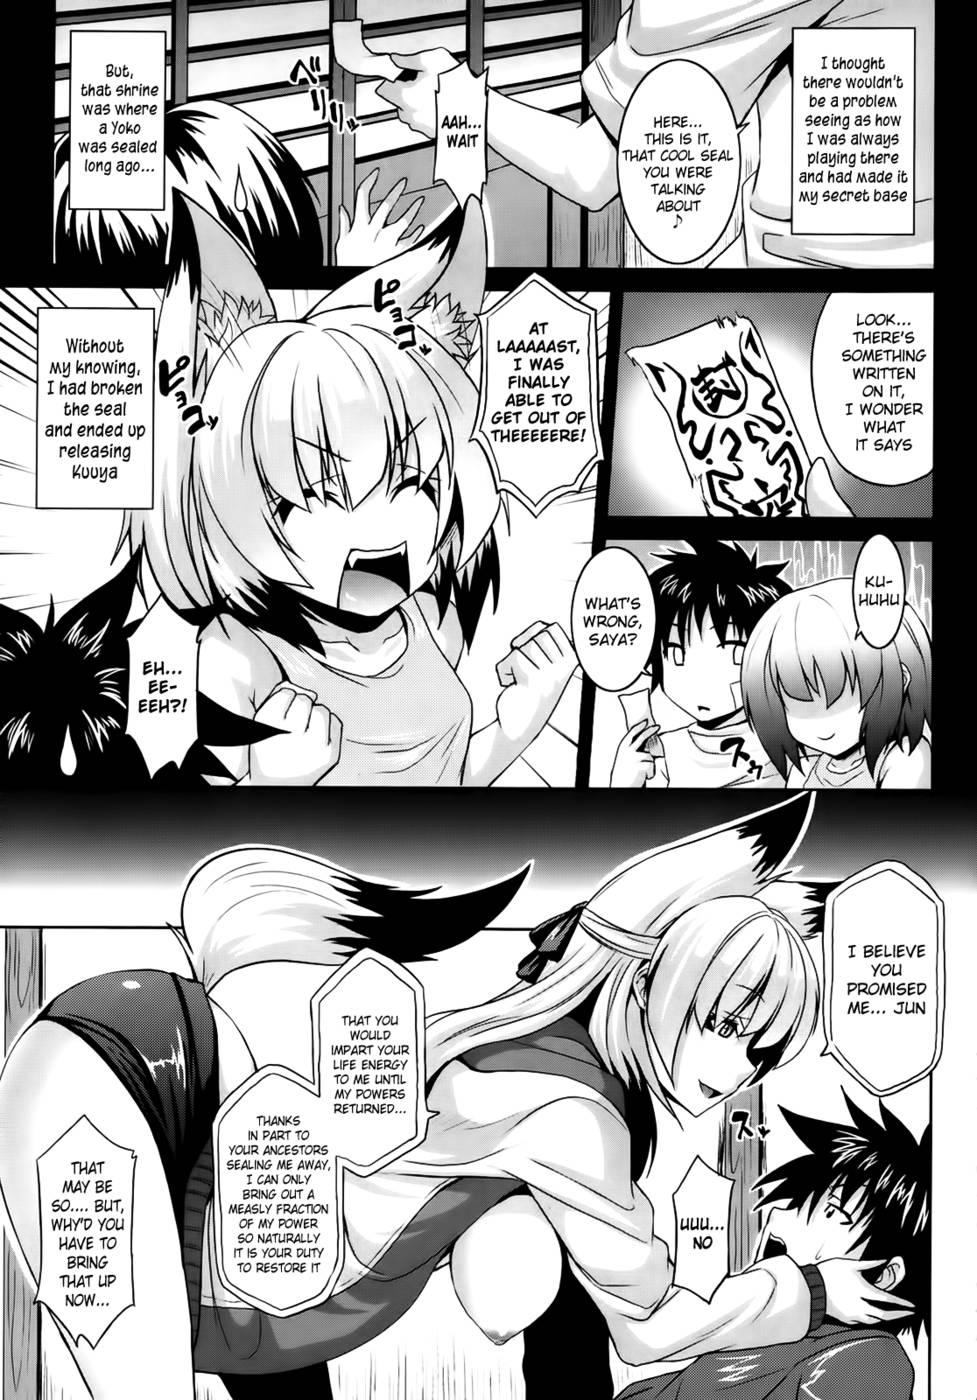 Hentai Manga Comic-A Foxy Childhood Friend-Read-3